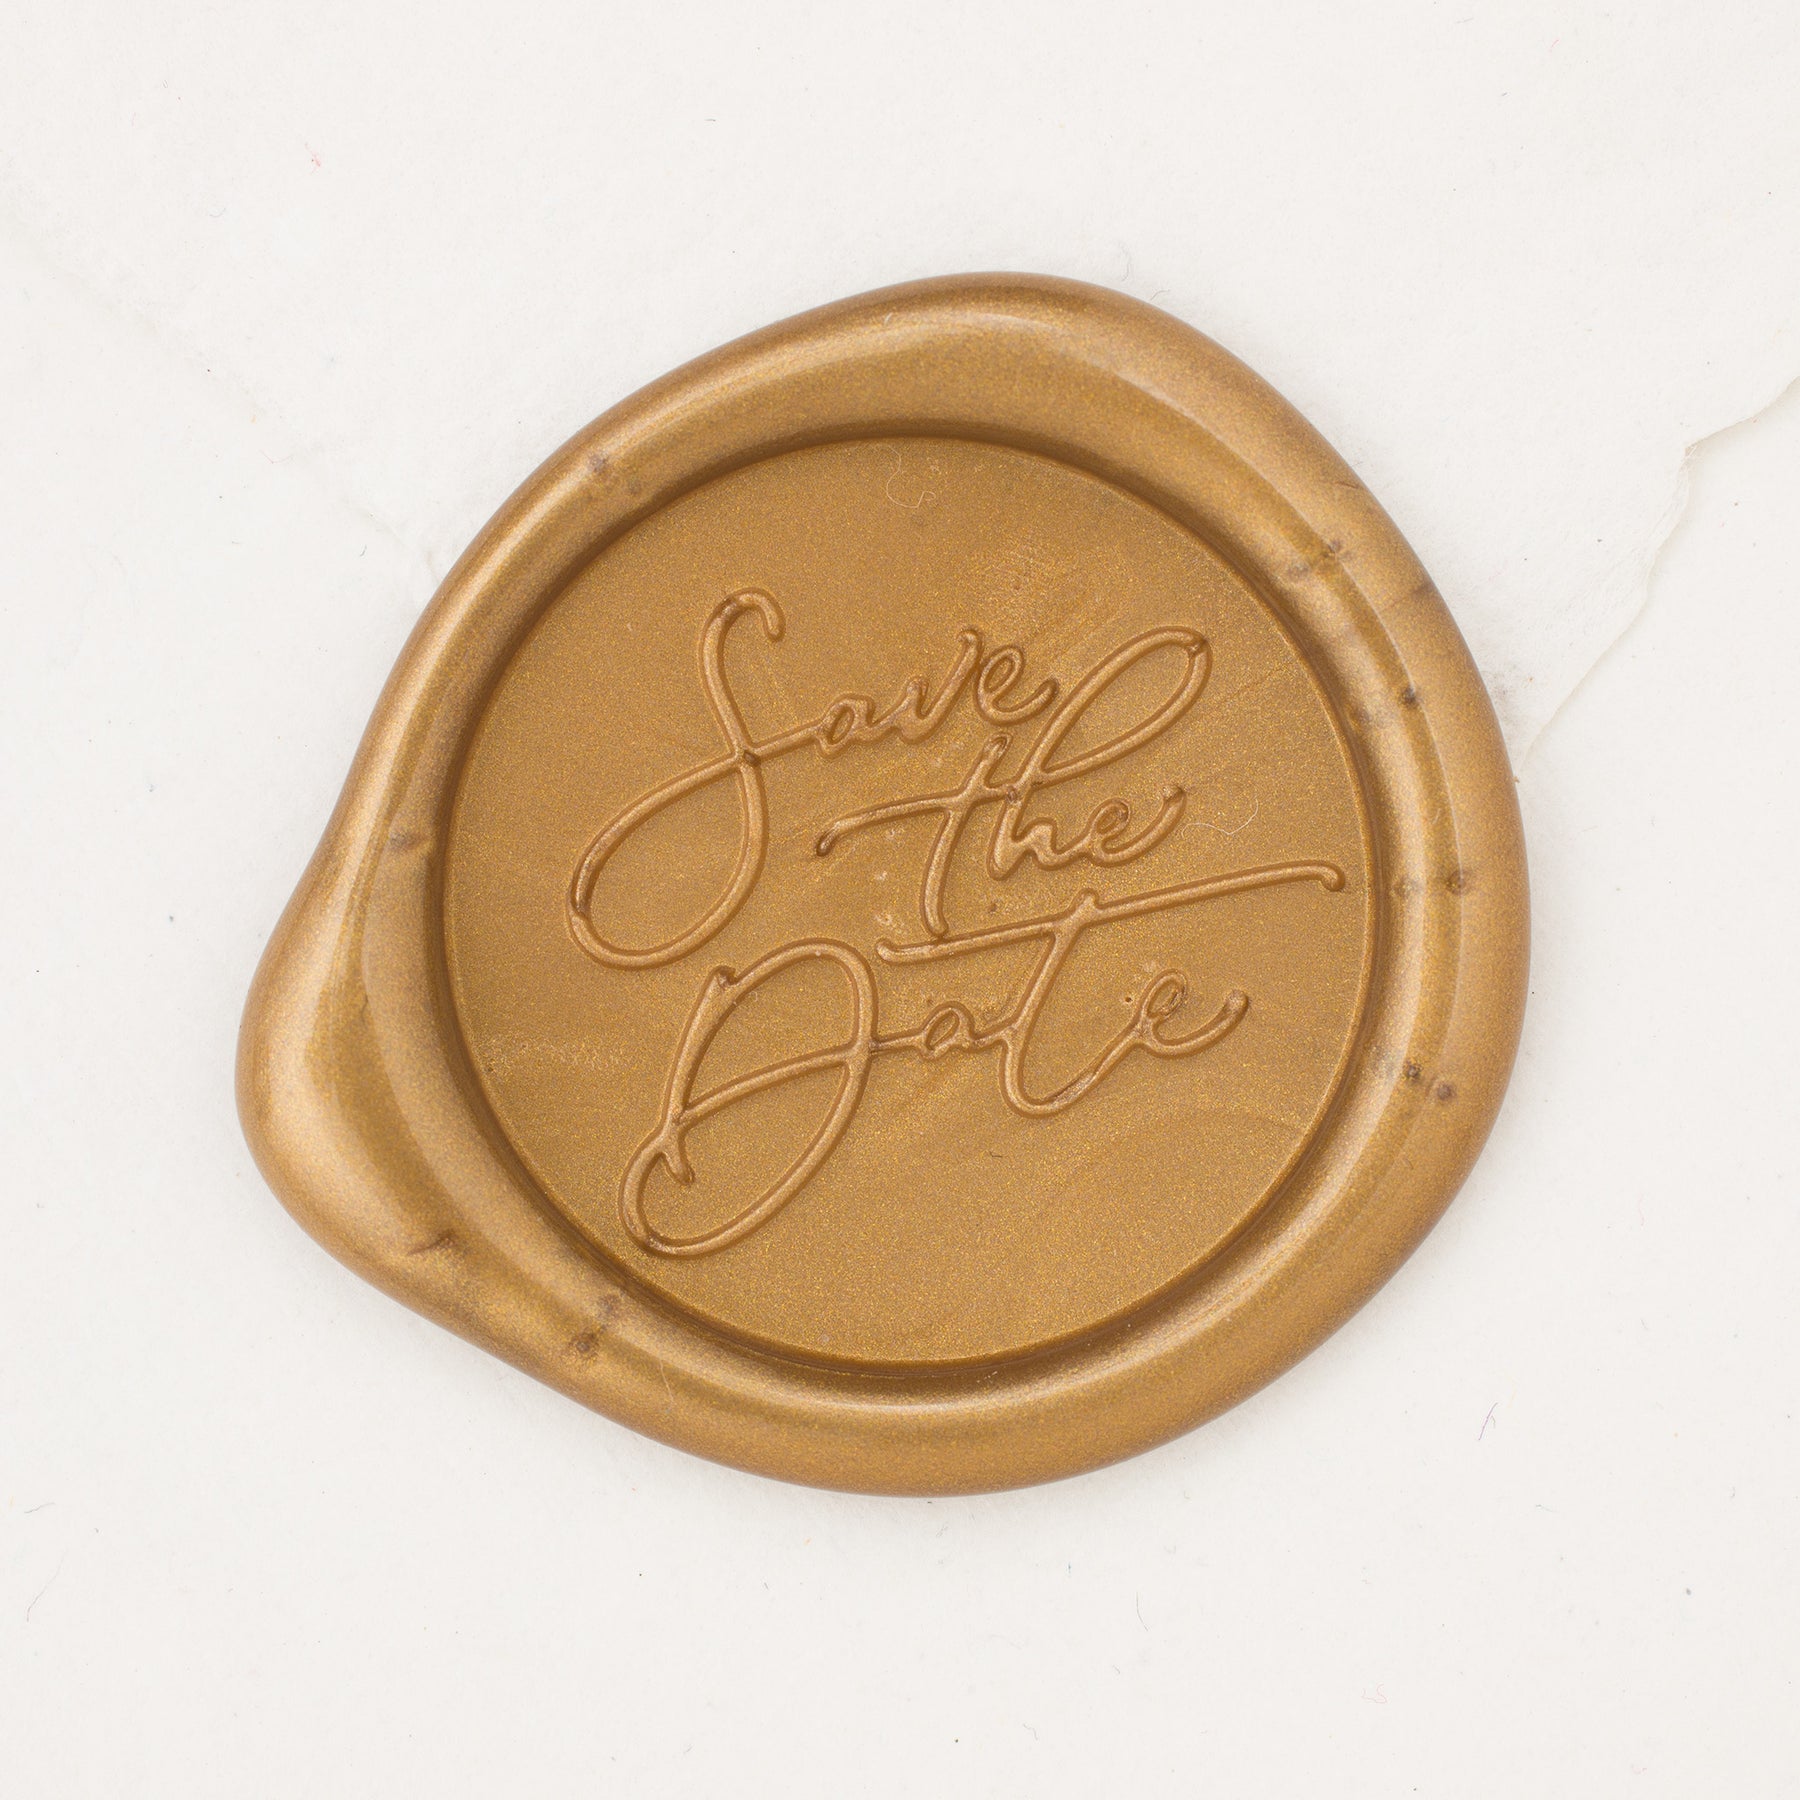 Letter Style Wax Seal Stickers Self Adhesive Wax - Temu